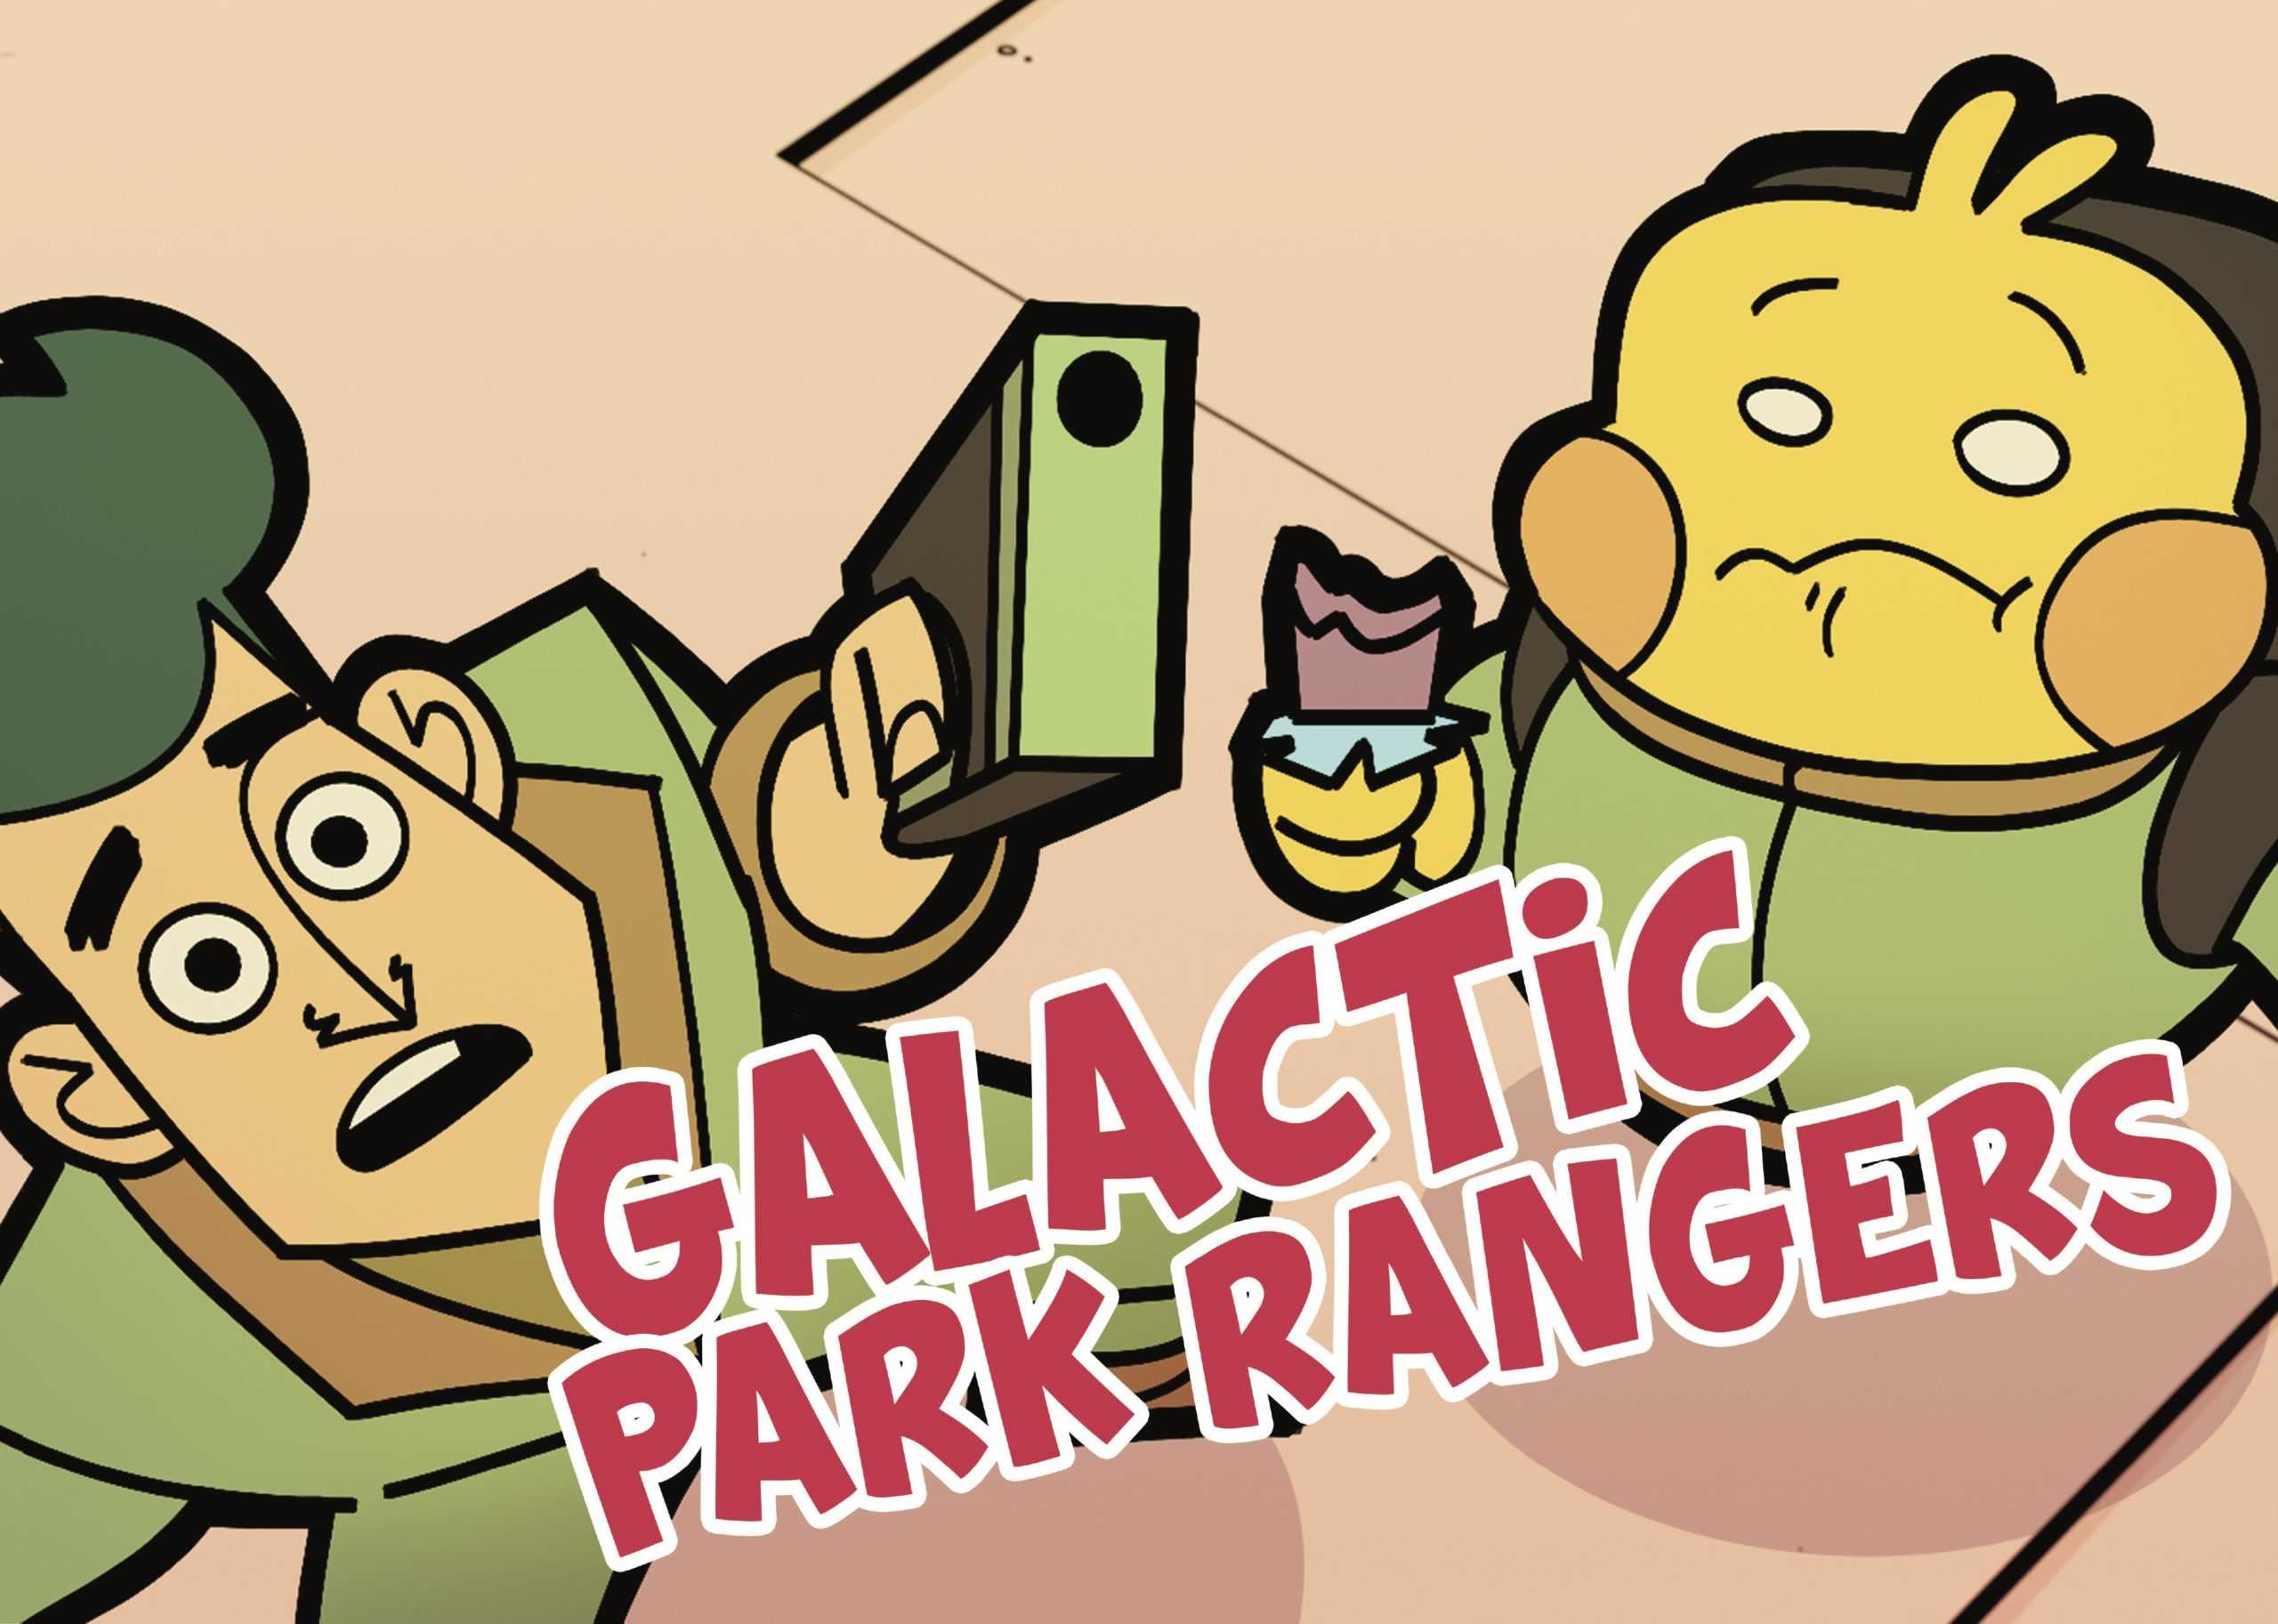 galactic-park-rangers-2-scaled.jpg